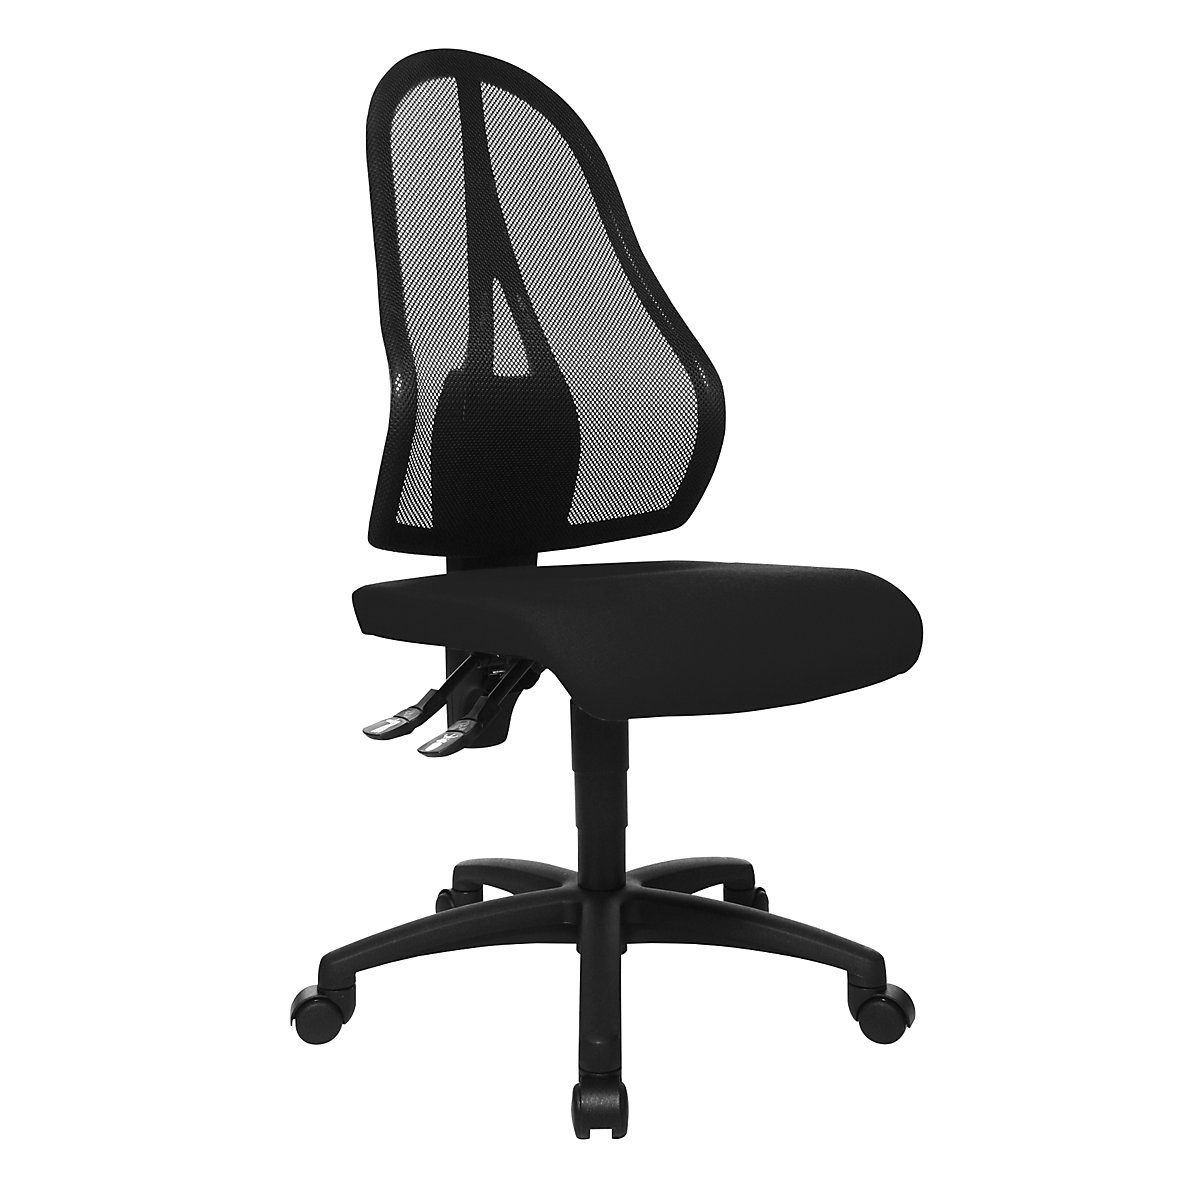 Uredska okretna stolica OPEN POINT P – Topstar, mrežasti naslon za leđa crne boje, bez naslona za ruke, presvlaka sjedala u crnoj boji-4